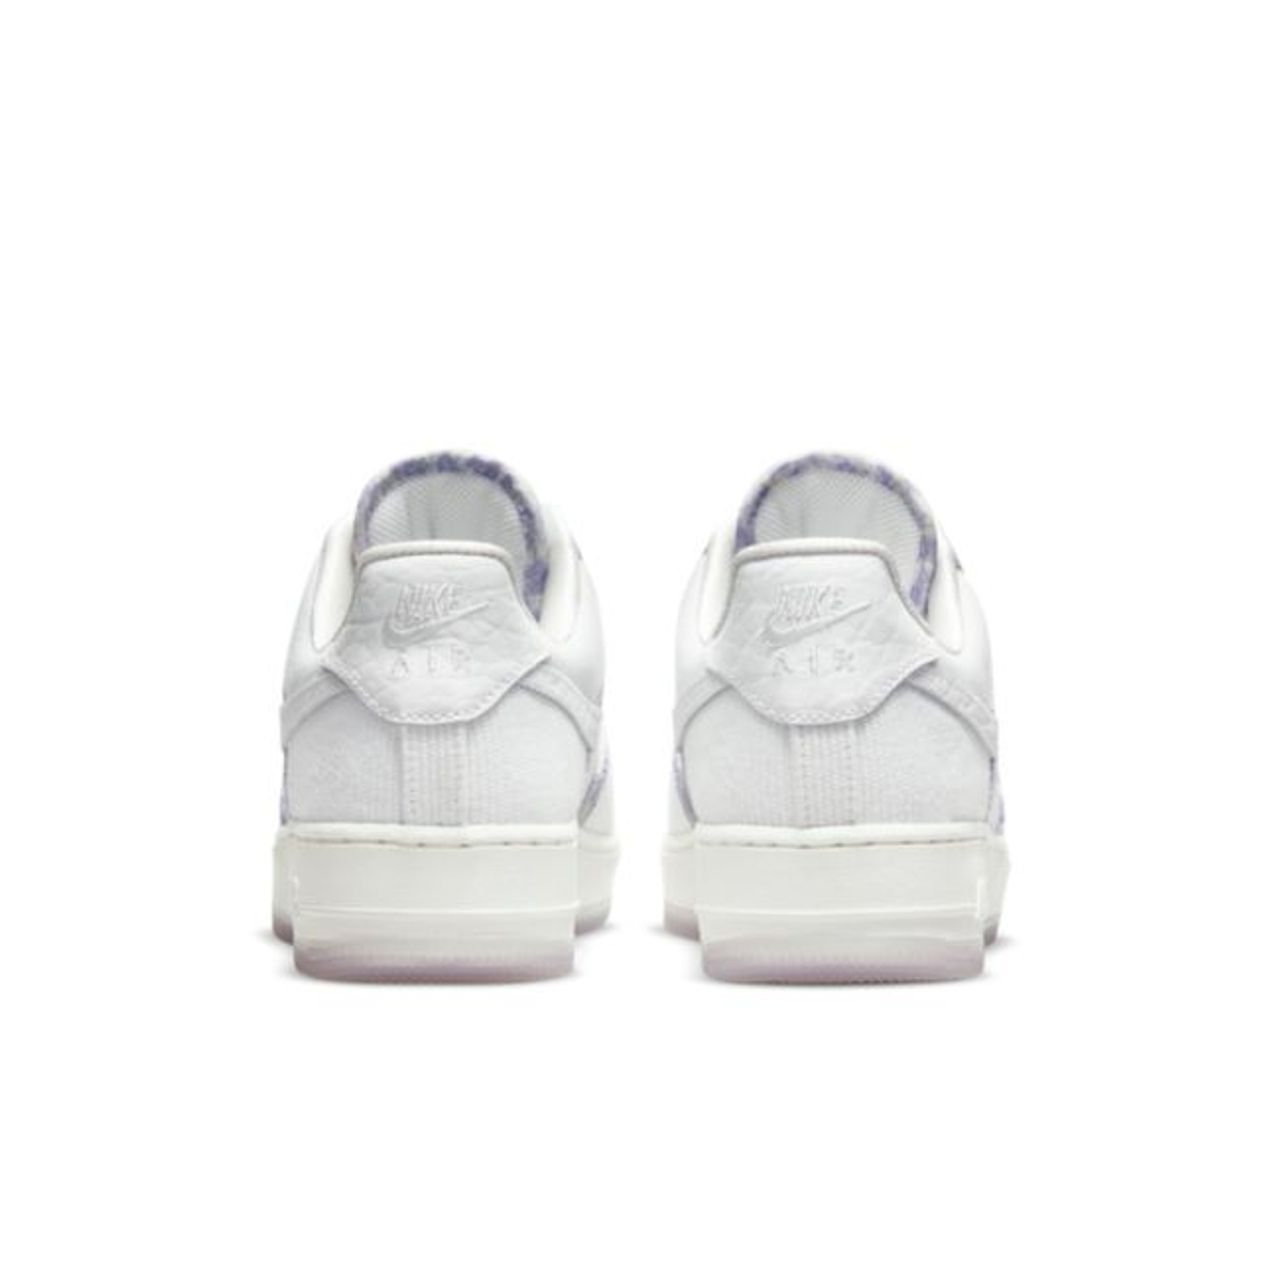 Nike Air Force 1 Low Damenschuh - Weiß